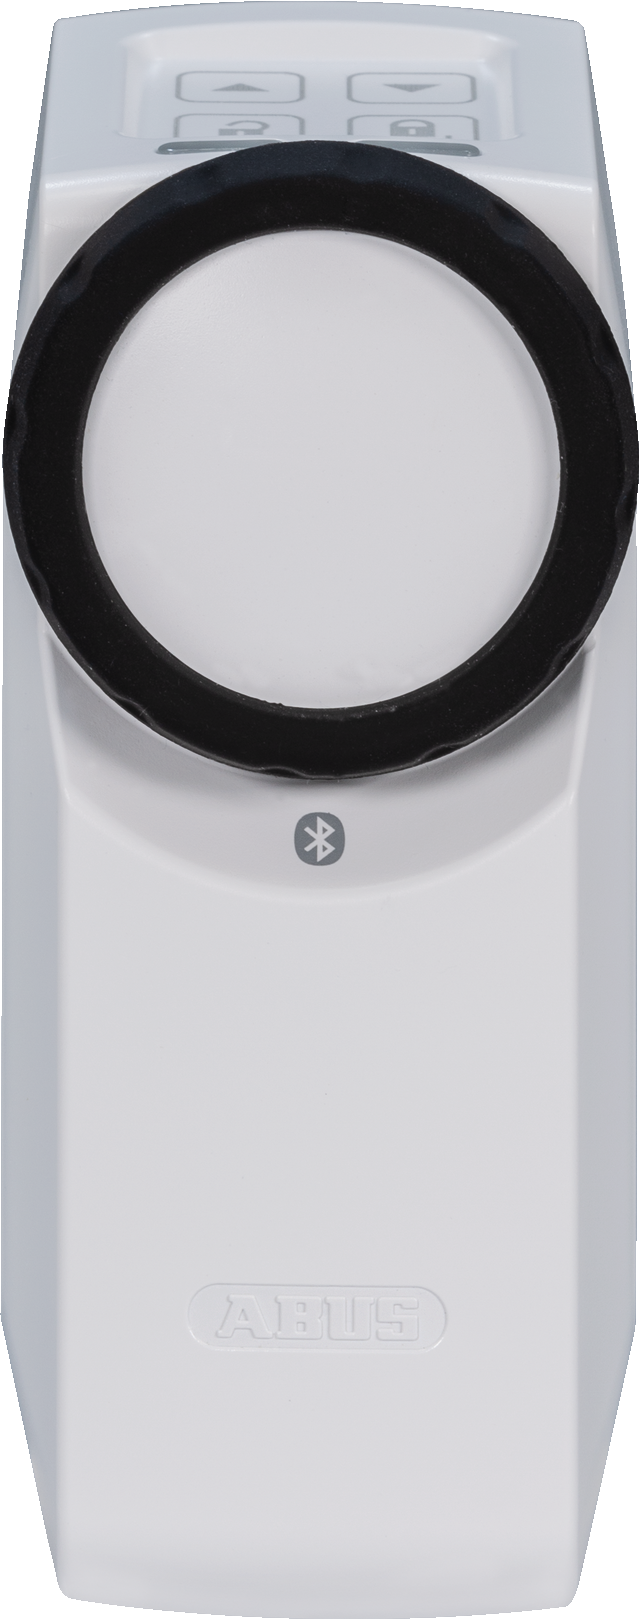 HomeTec Pro Bluetooth®-Türschlossantrieb CFA3100 weiß